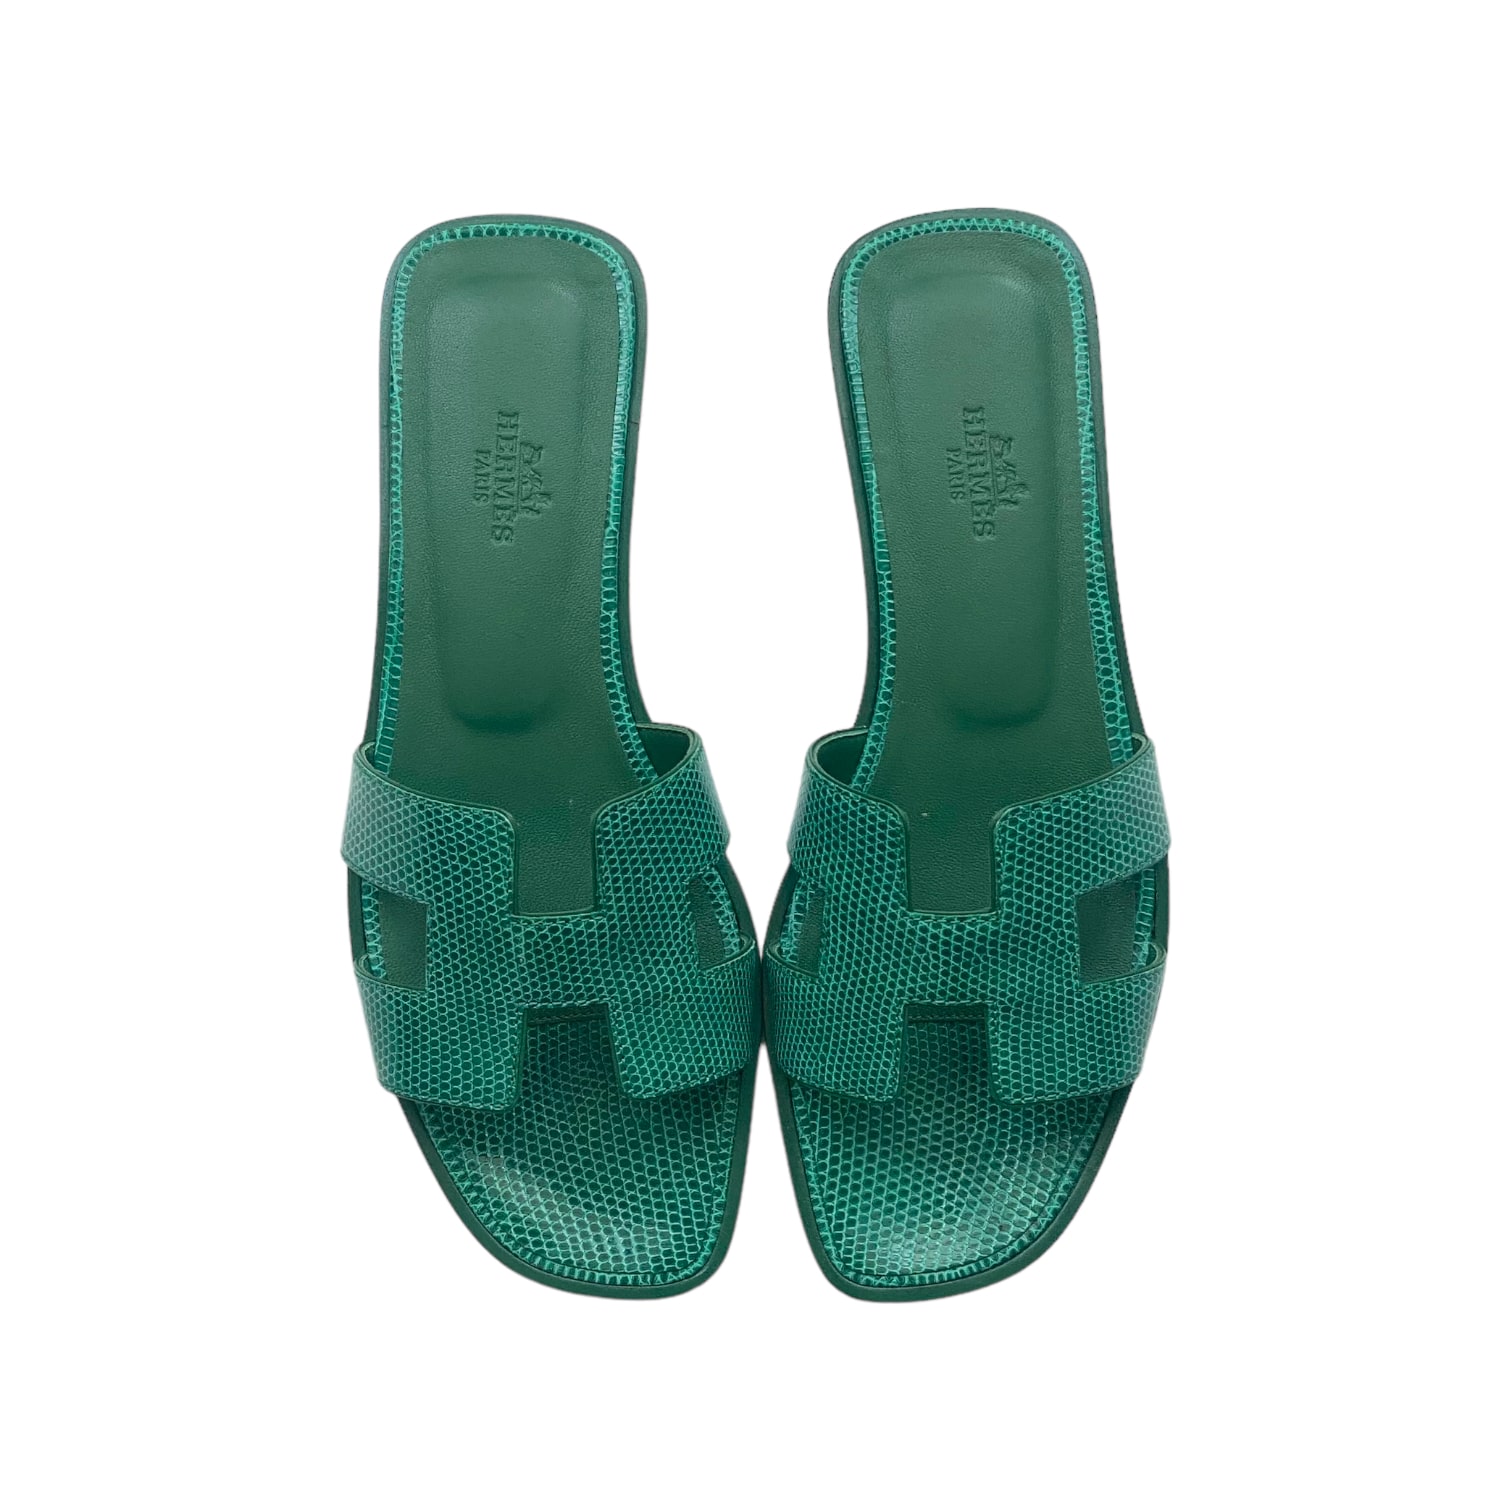 Hermes Oran sandal green Lizard size 37.5 EU - The Luxury Flavor